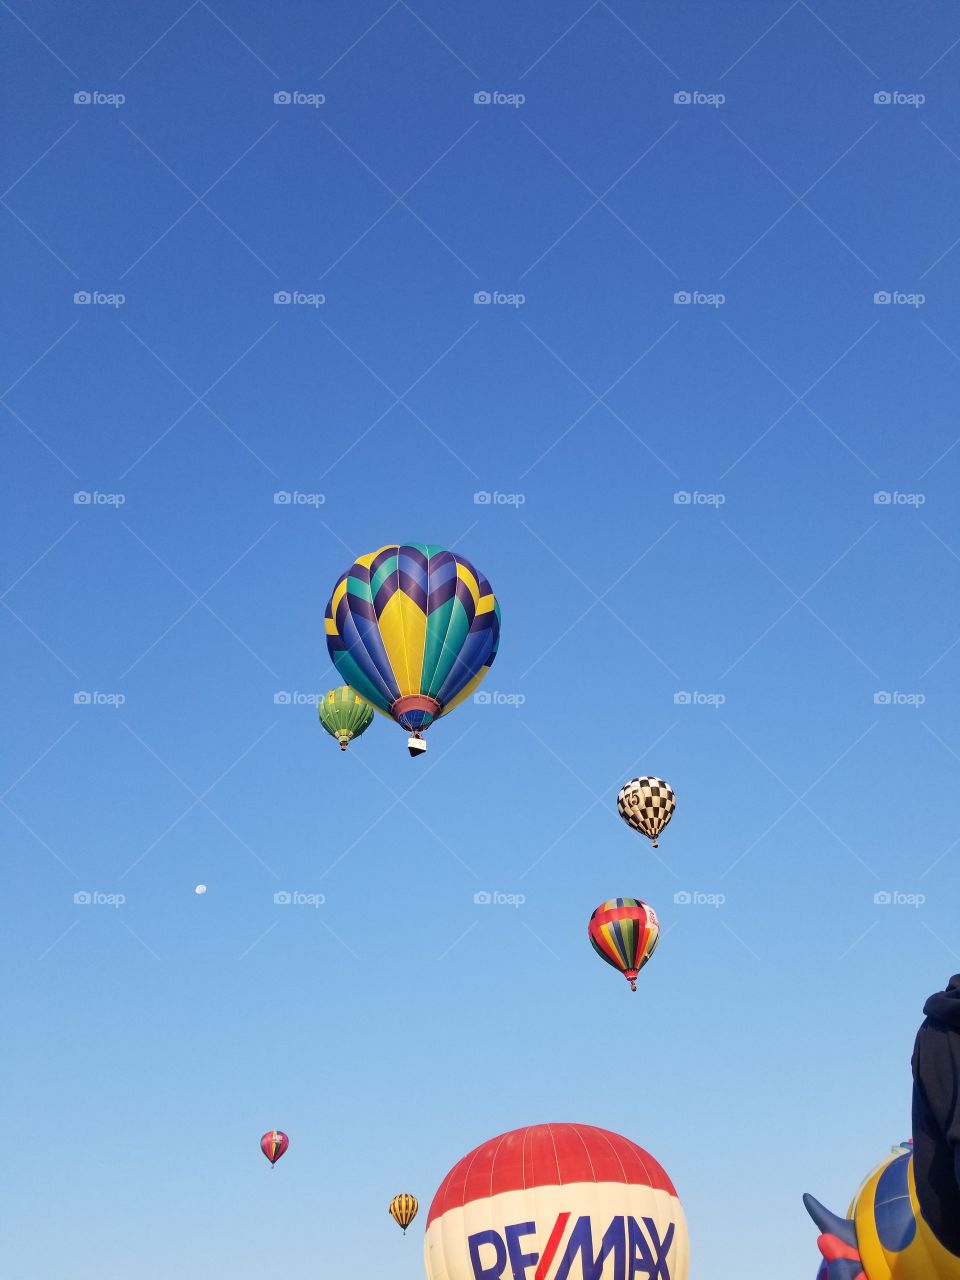 Hot air balloon races in Reno, NV